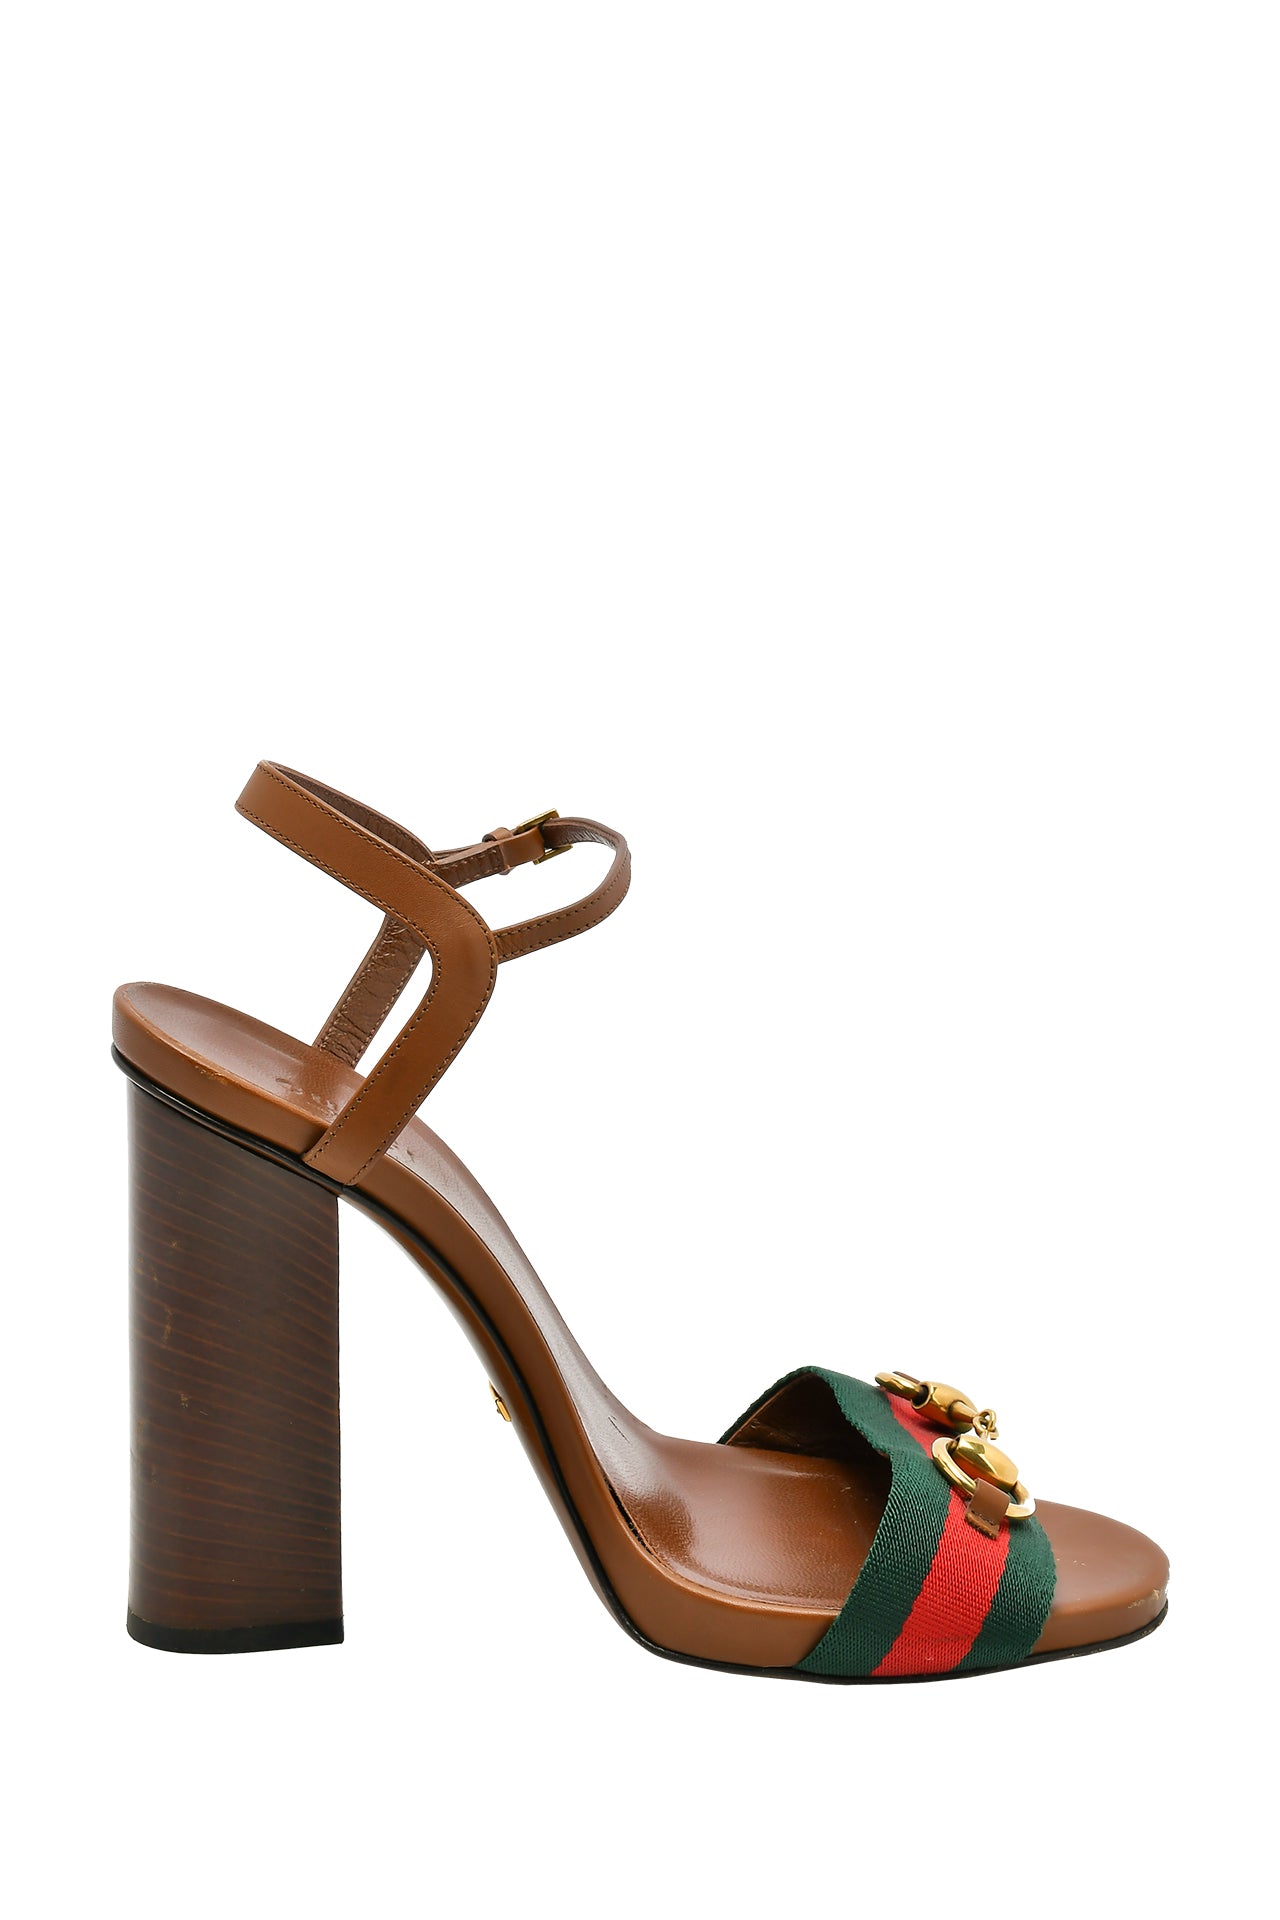 Gucci Brown Leather Horsebit Web Ankle Strap Sandals